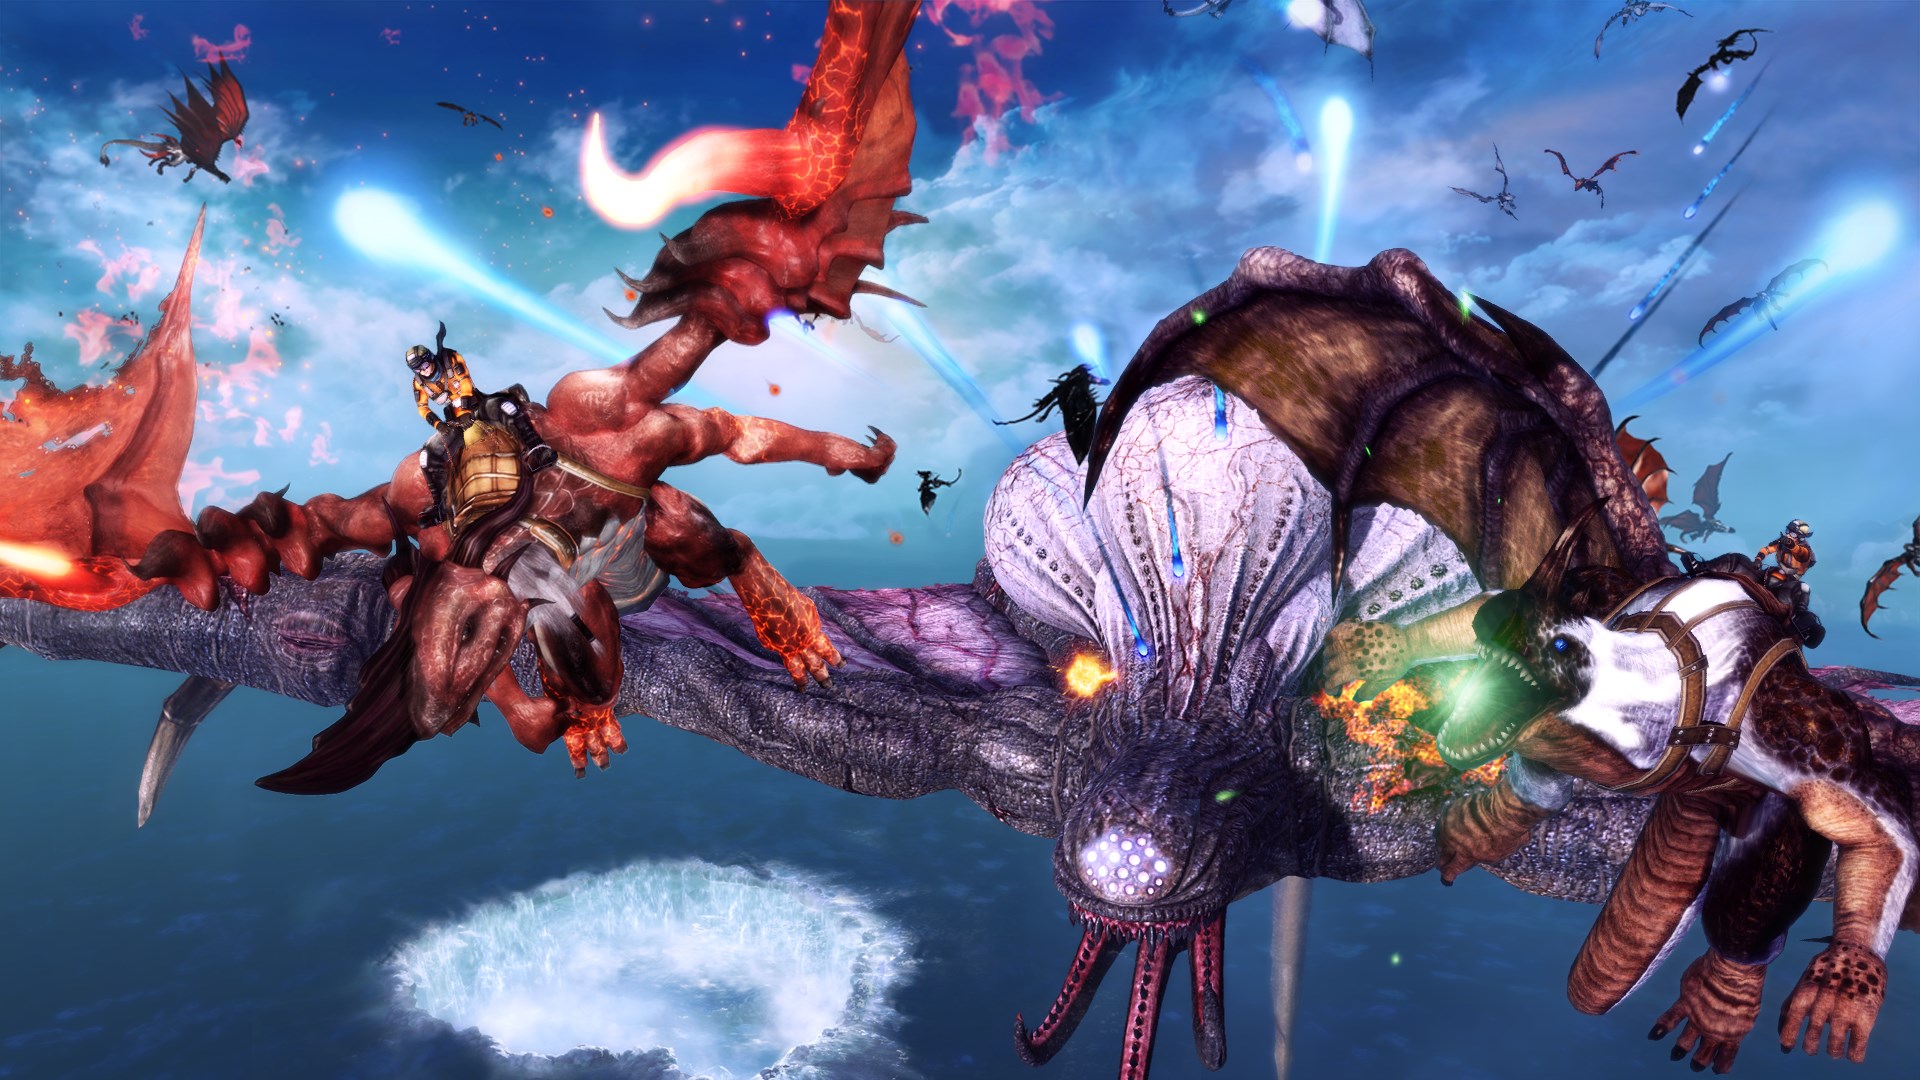 Crimson Dragon Discounted on Xbox Live